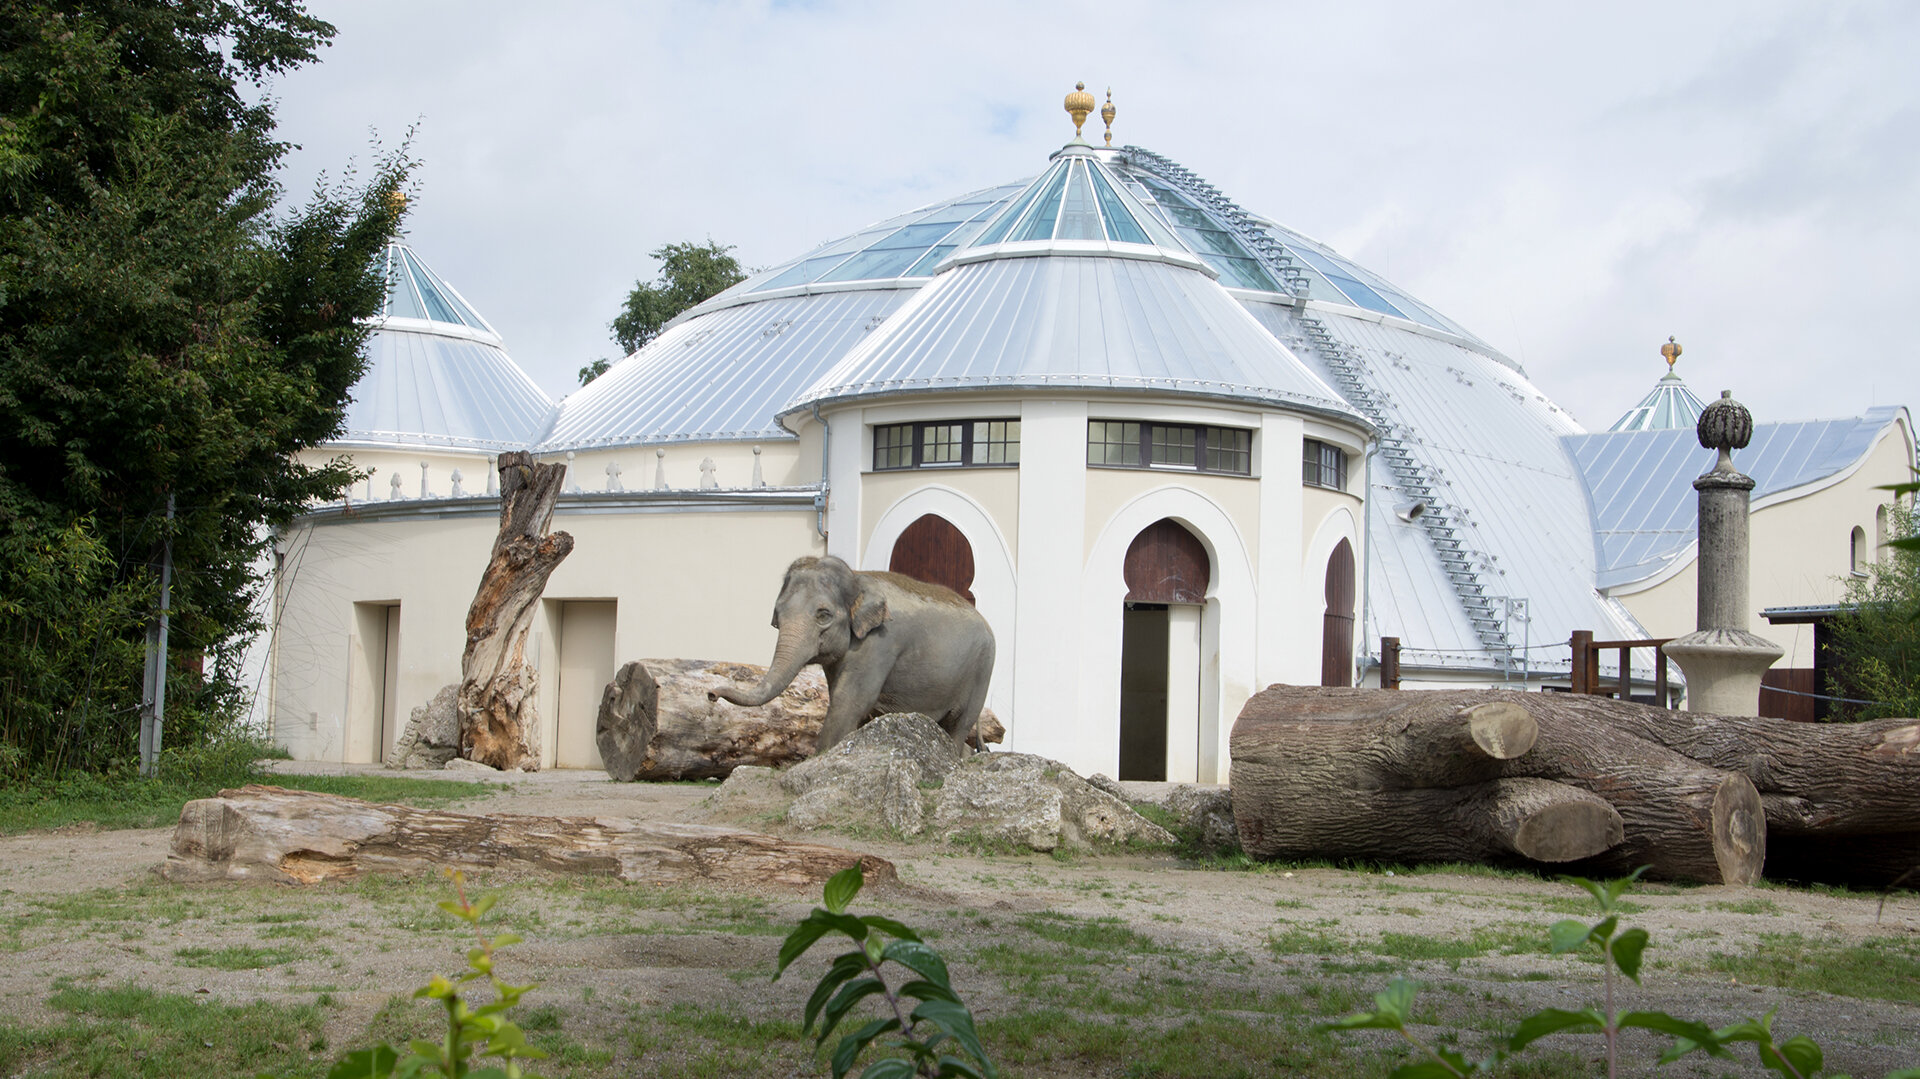 Hellabrunn elephant house, roof safety